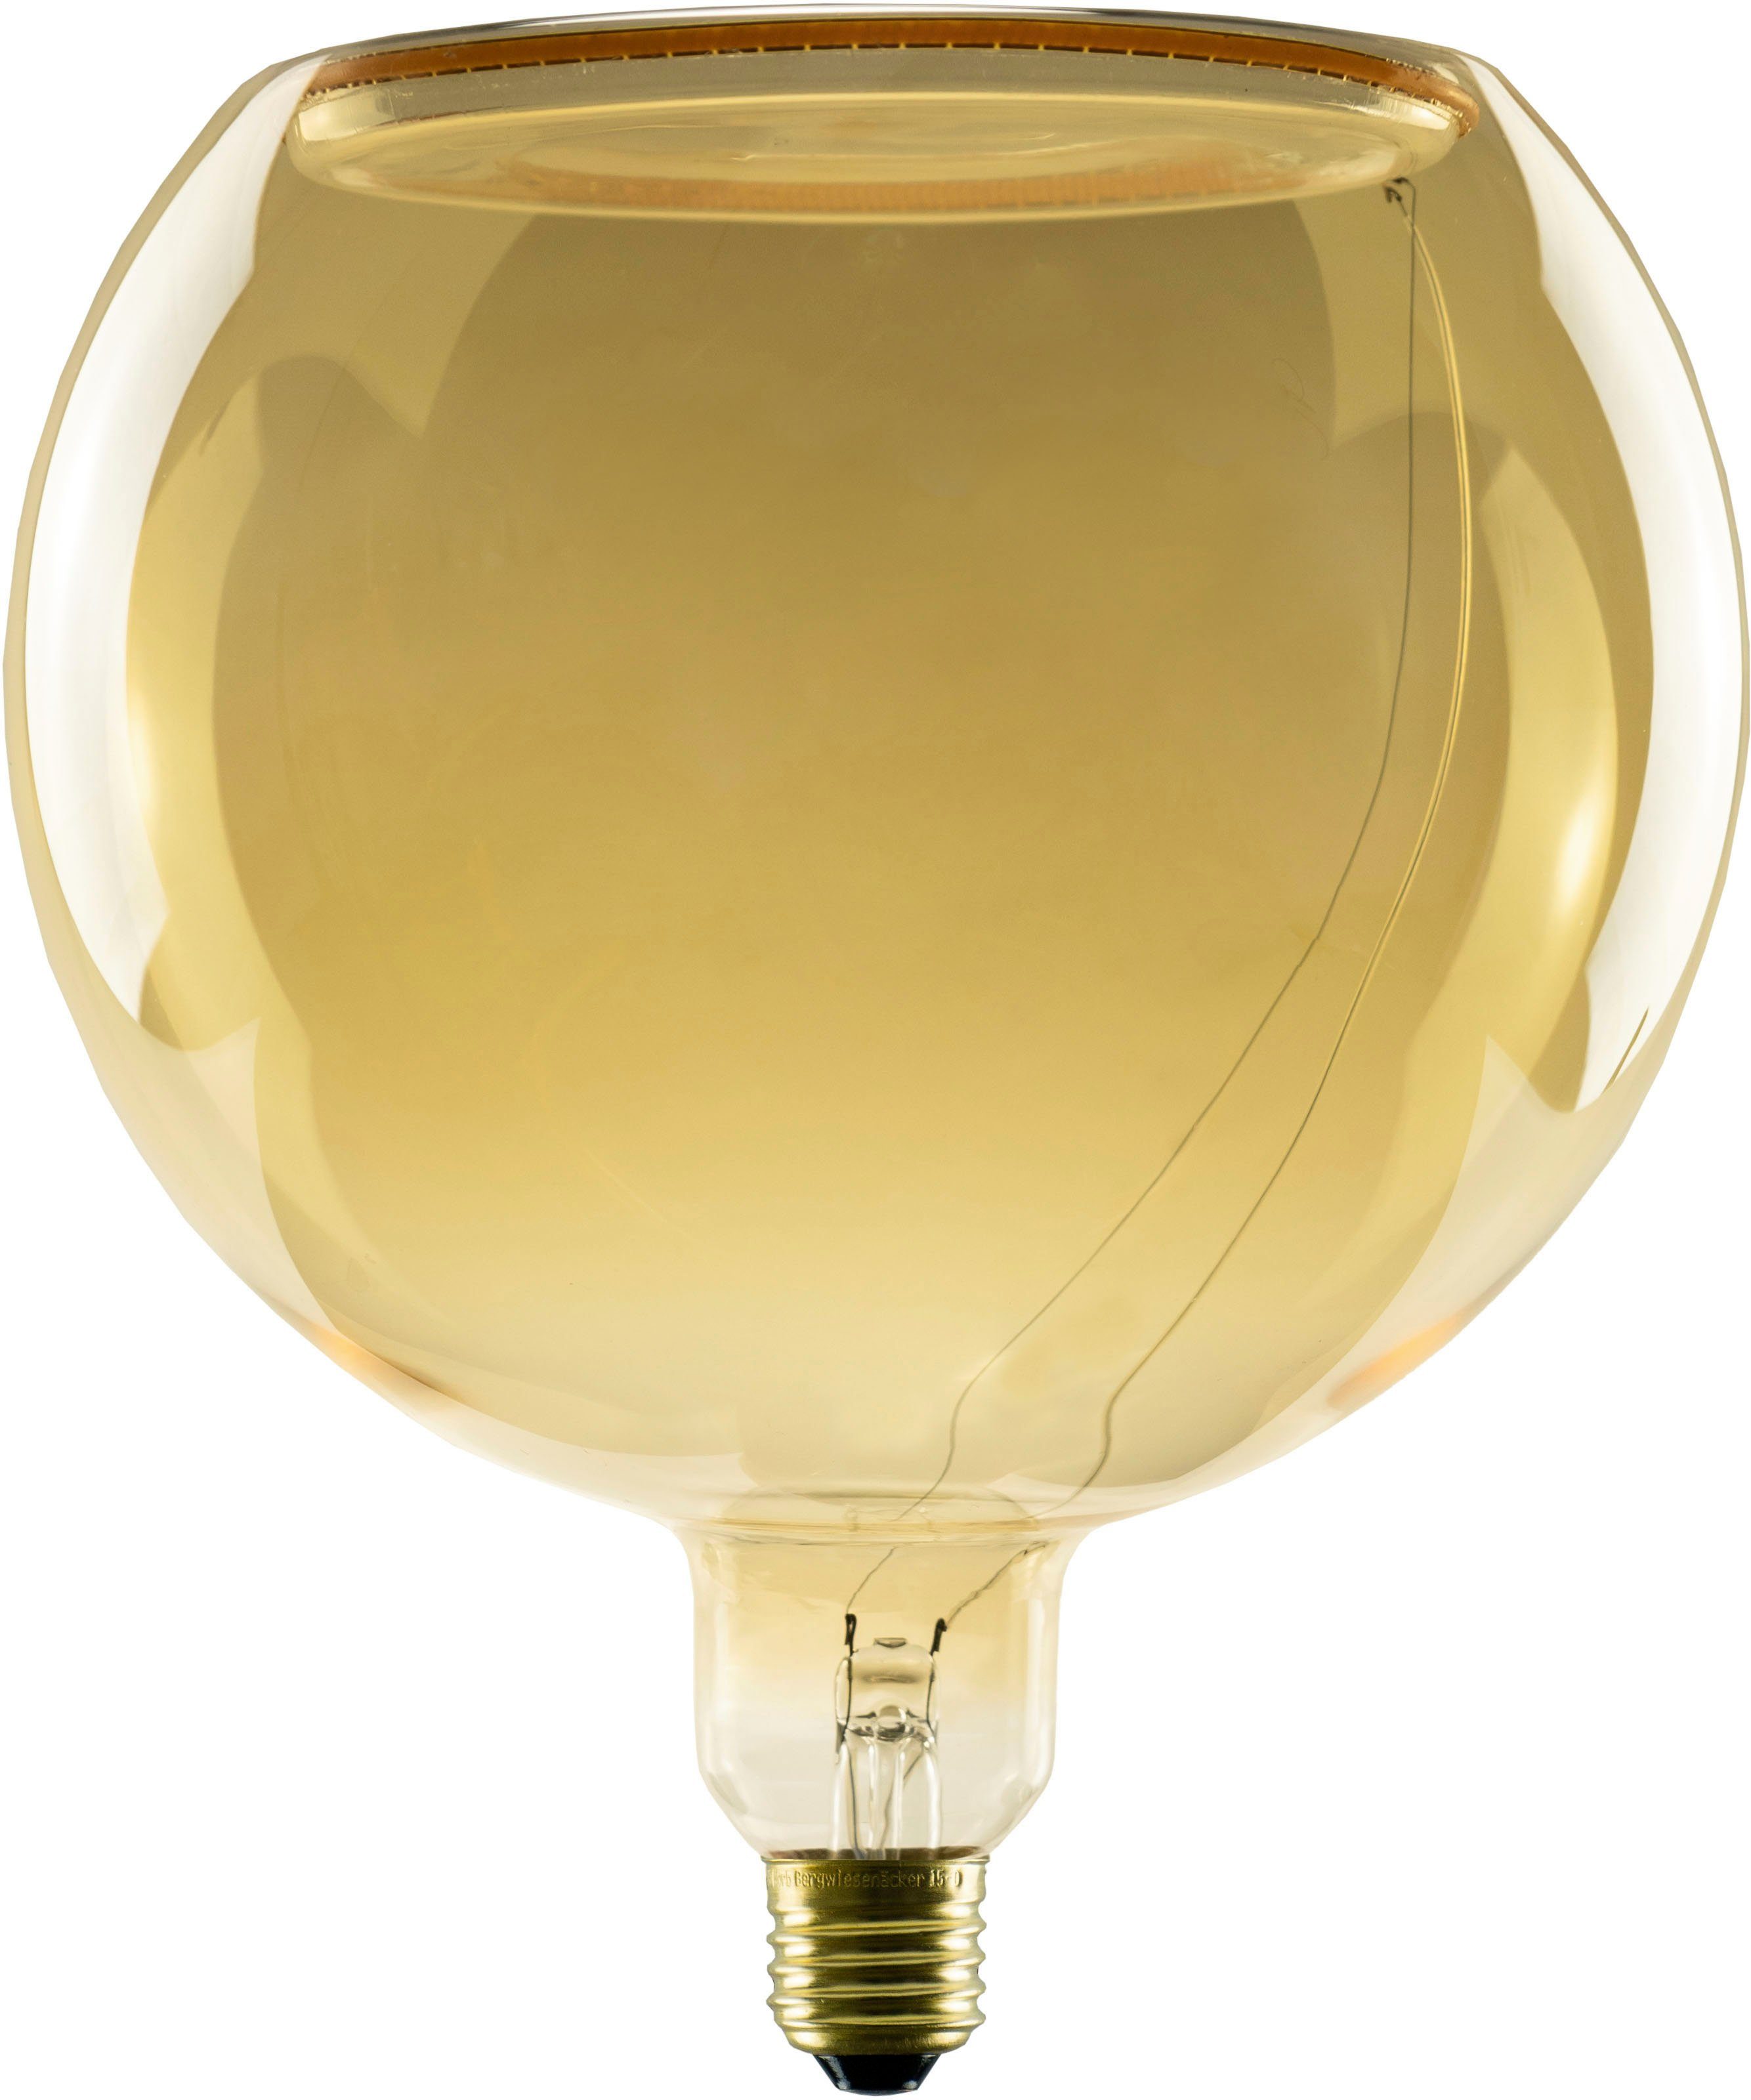 SEGULA LED-Leuchtmittel LED Floating Globe 1 LED E27, Aussenbereich Floating CRI E27, dimmbar, gold, 4,5W, Extra-Warmweiß, gold, 200 Globe St., 200 90